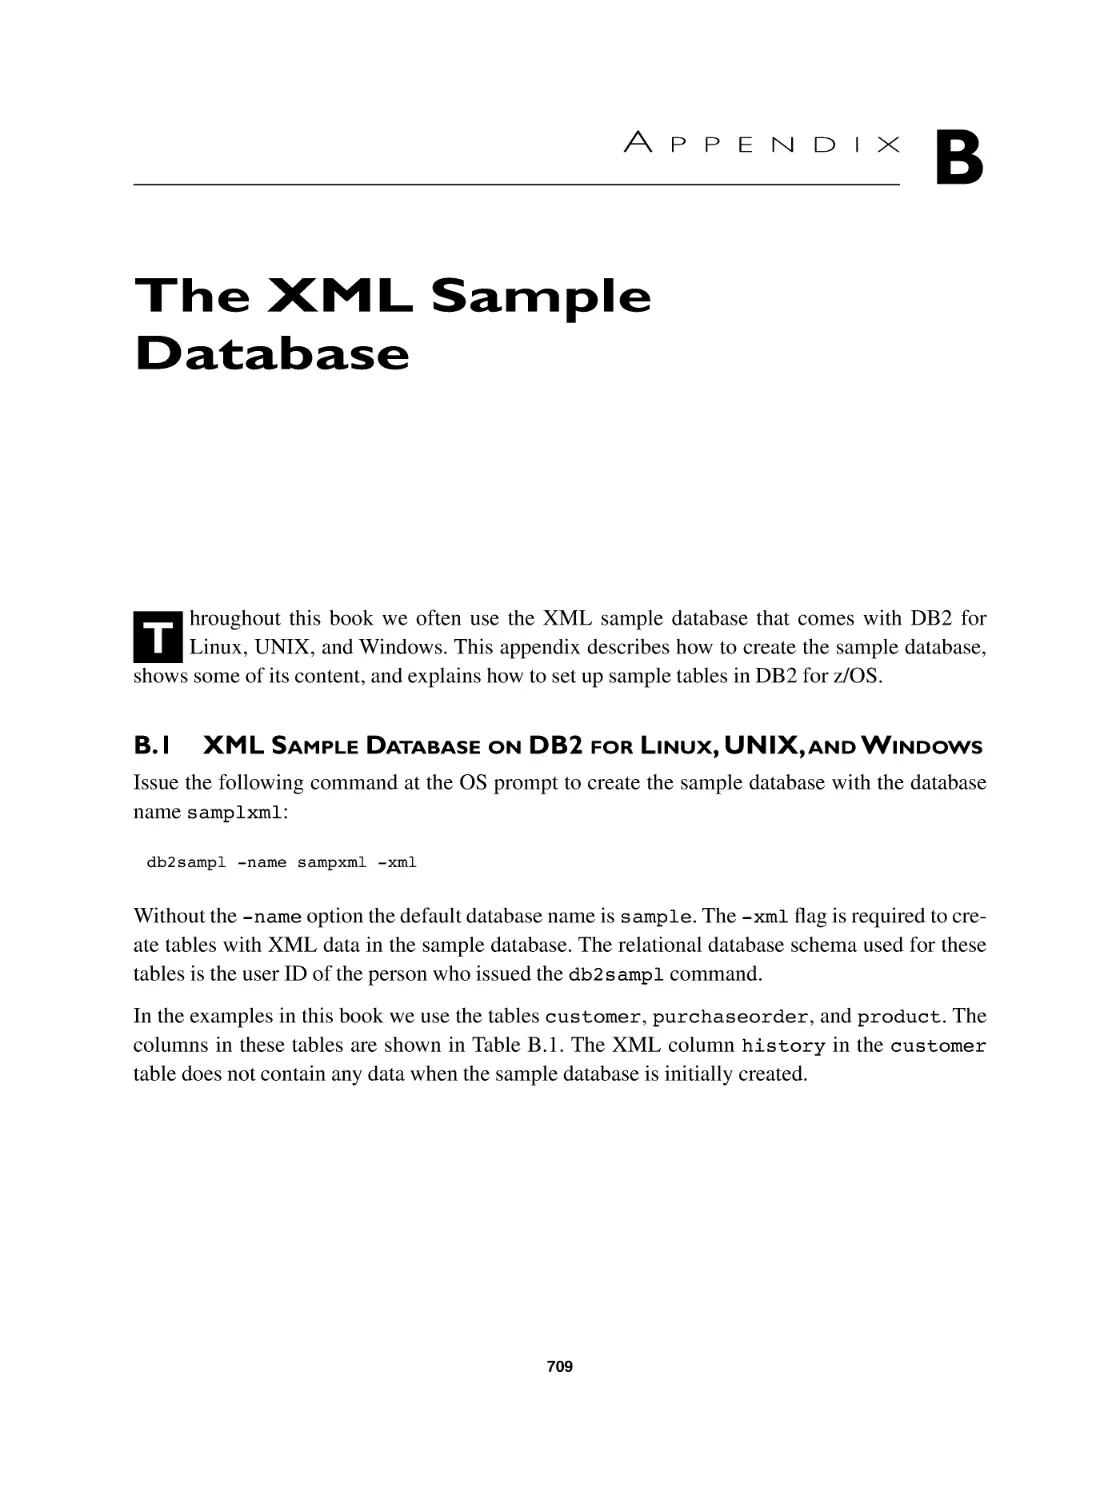 Appendix B
B.1 XML Sample Database on DB2 for Linux, UNIX, and Windows